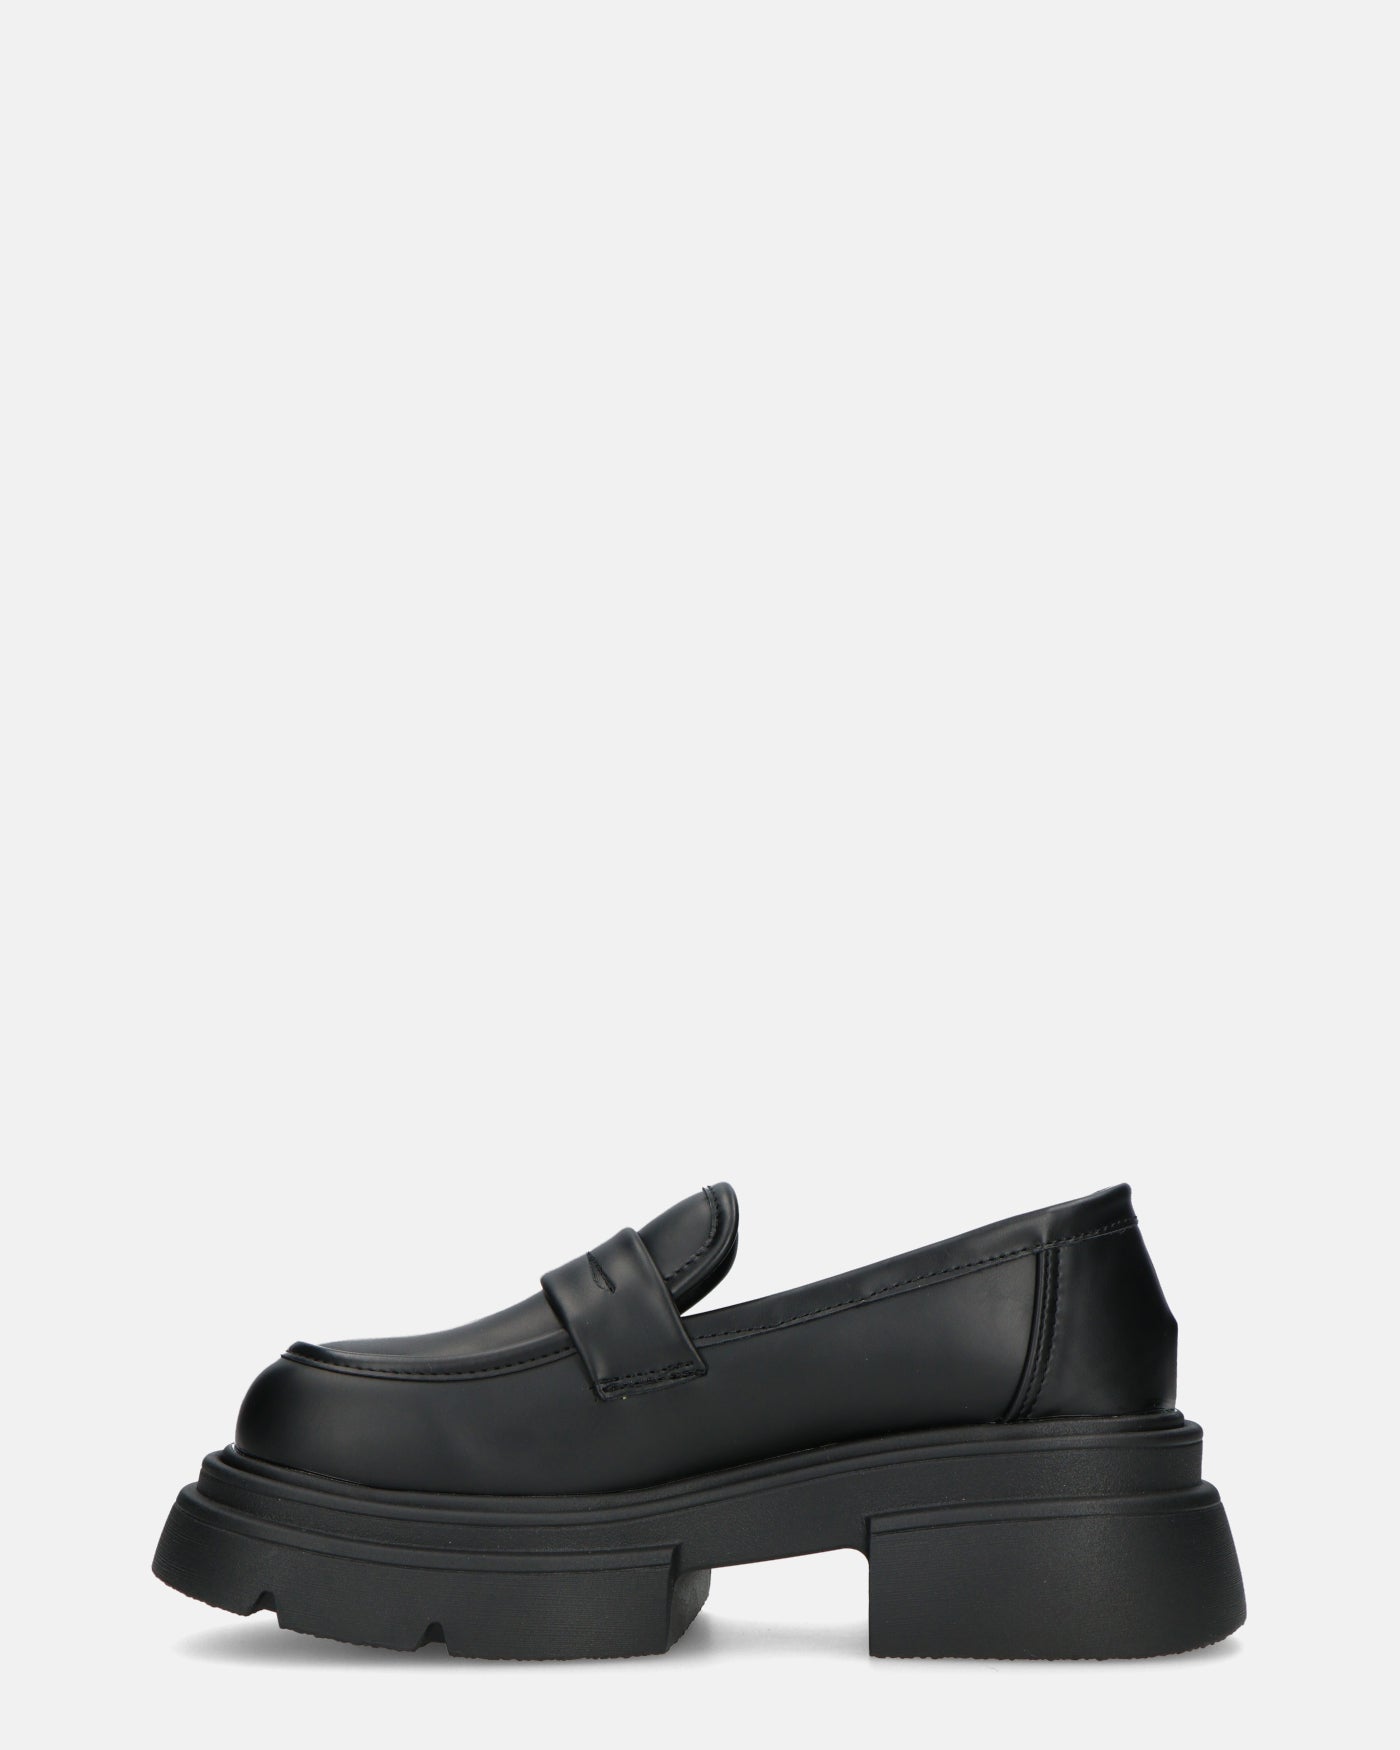 MARIKA - black platform moccasin flat shoes